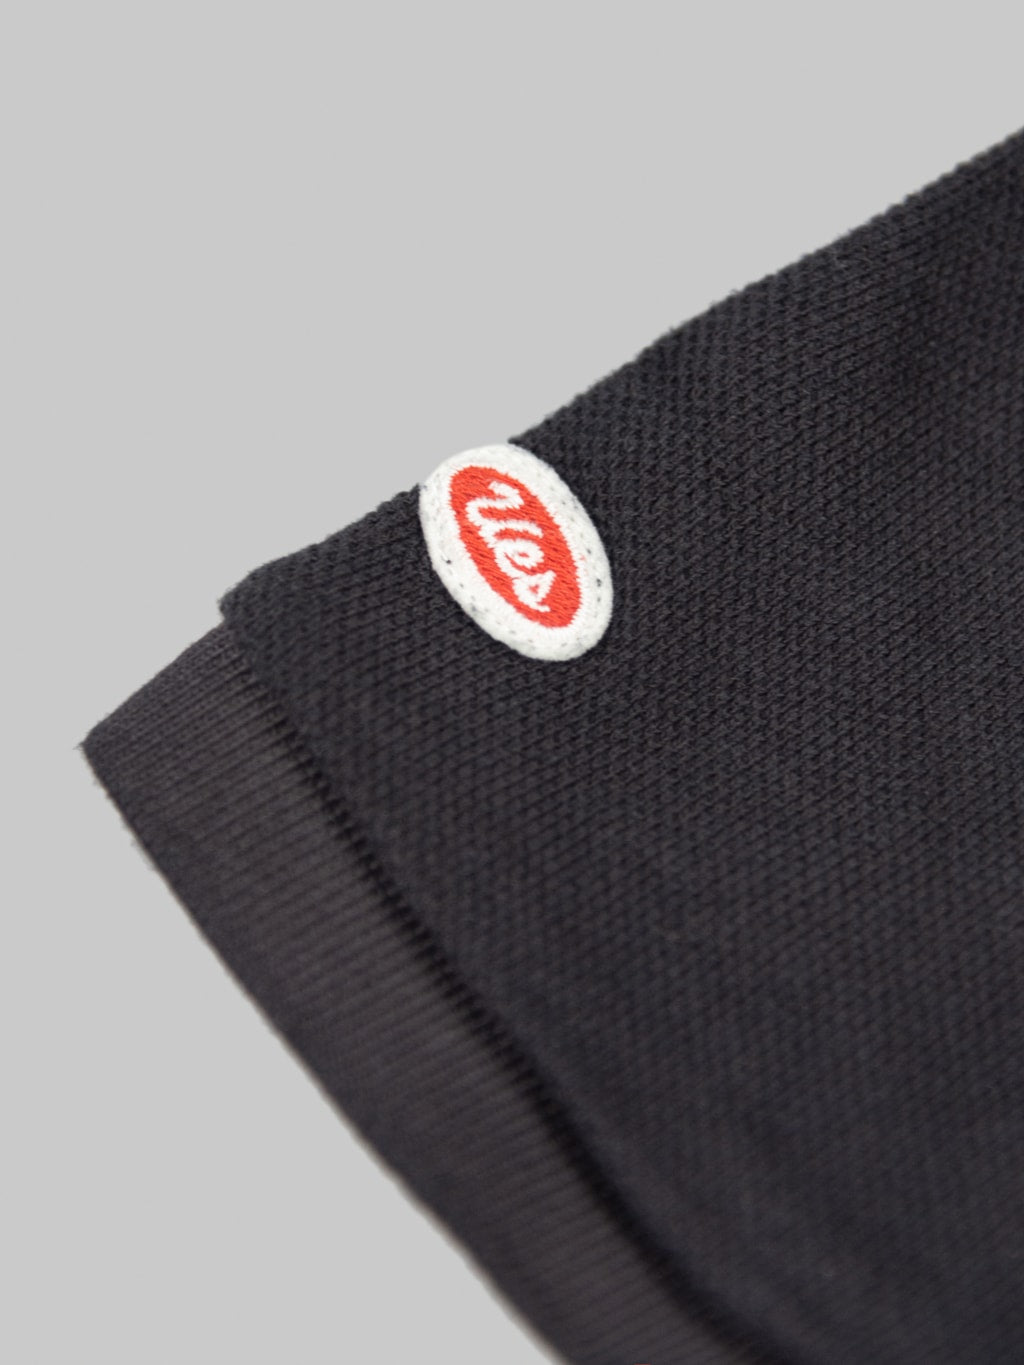 ues polo shirt black brand logo patch